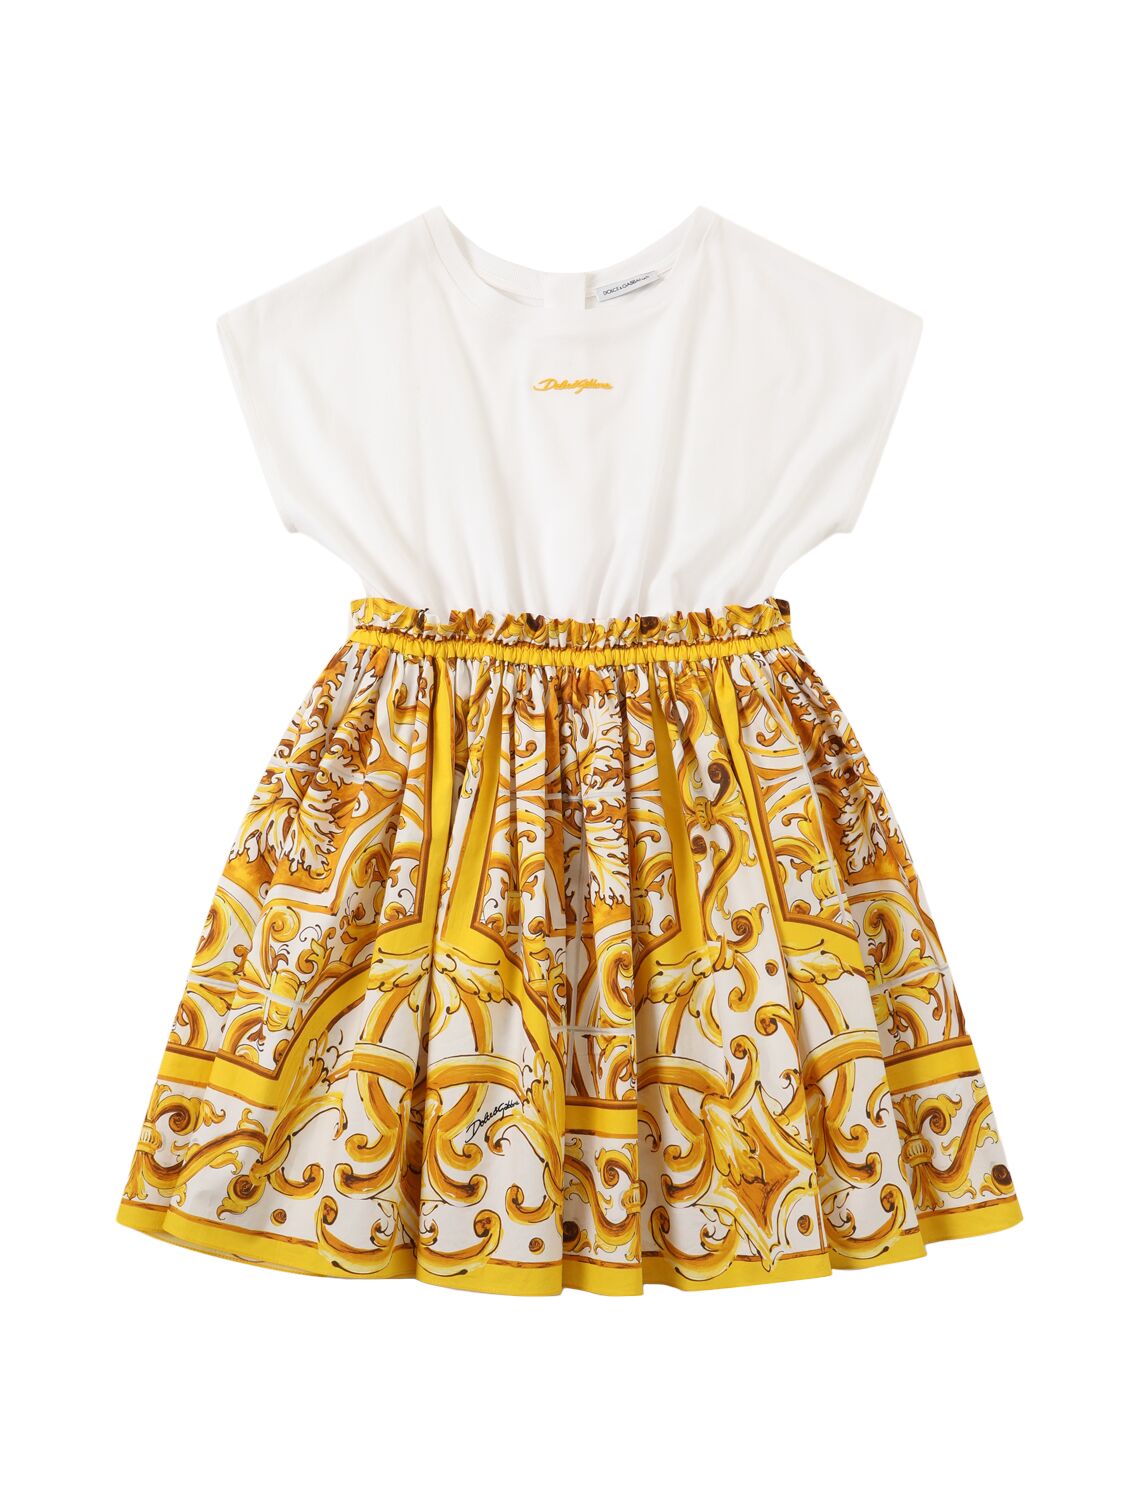 Dolce & Gabbana Babies' Maiolica Print Cotton Jersey Dress In Yellow/white